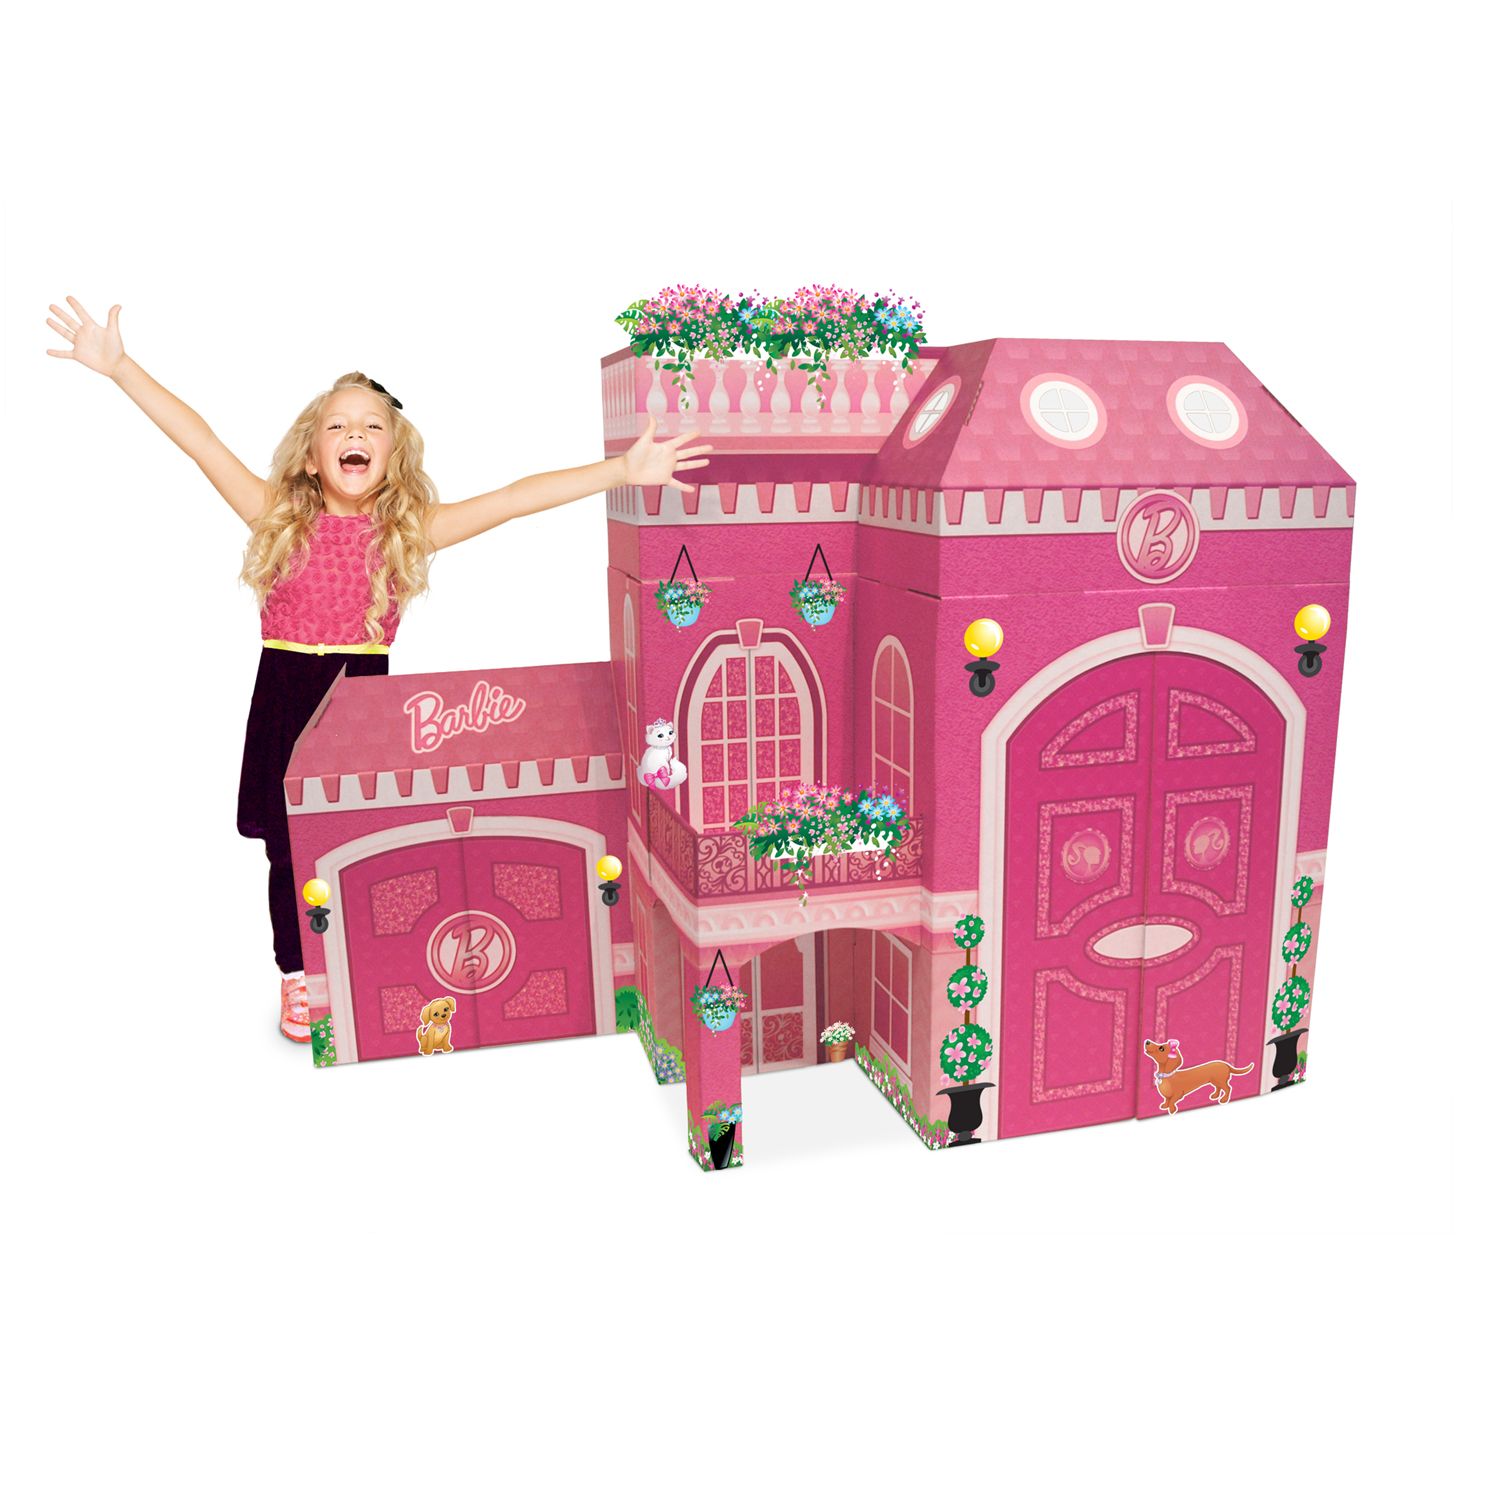 cardboard barbie dream house